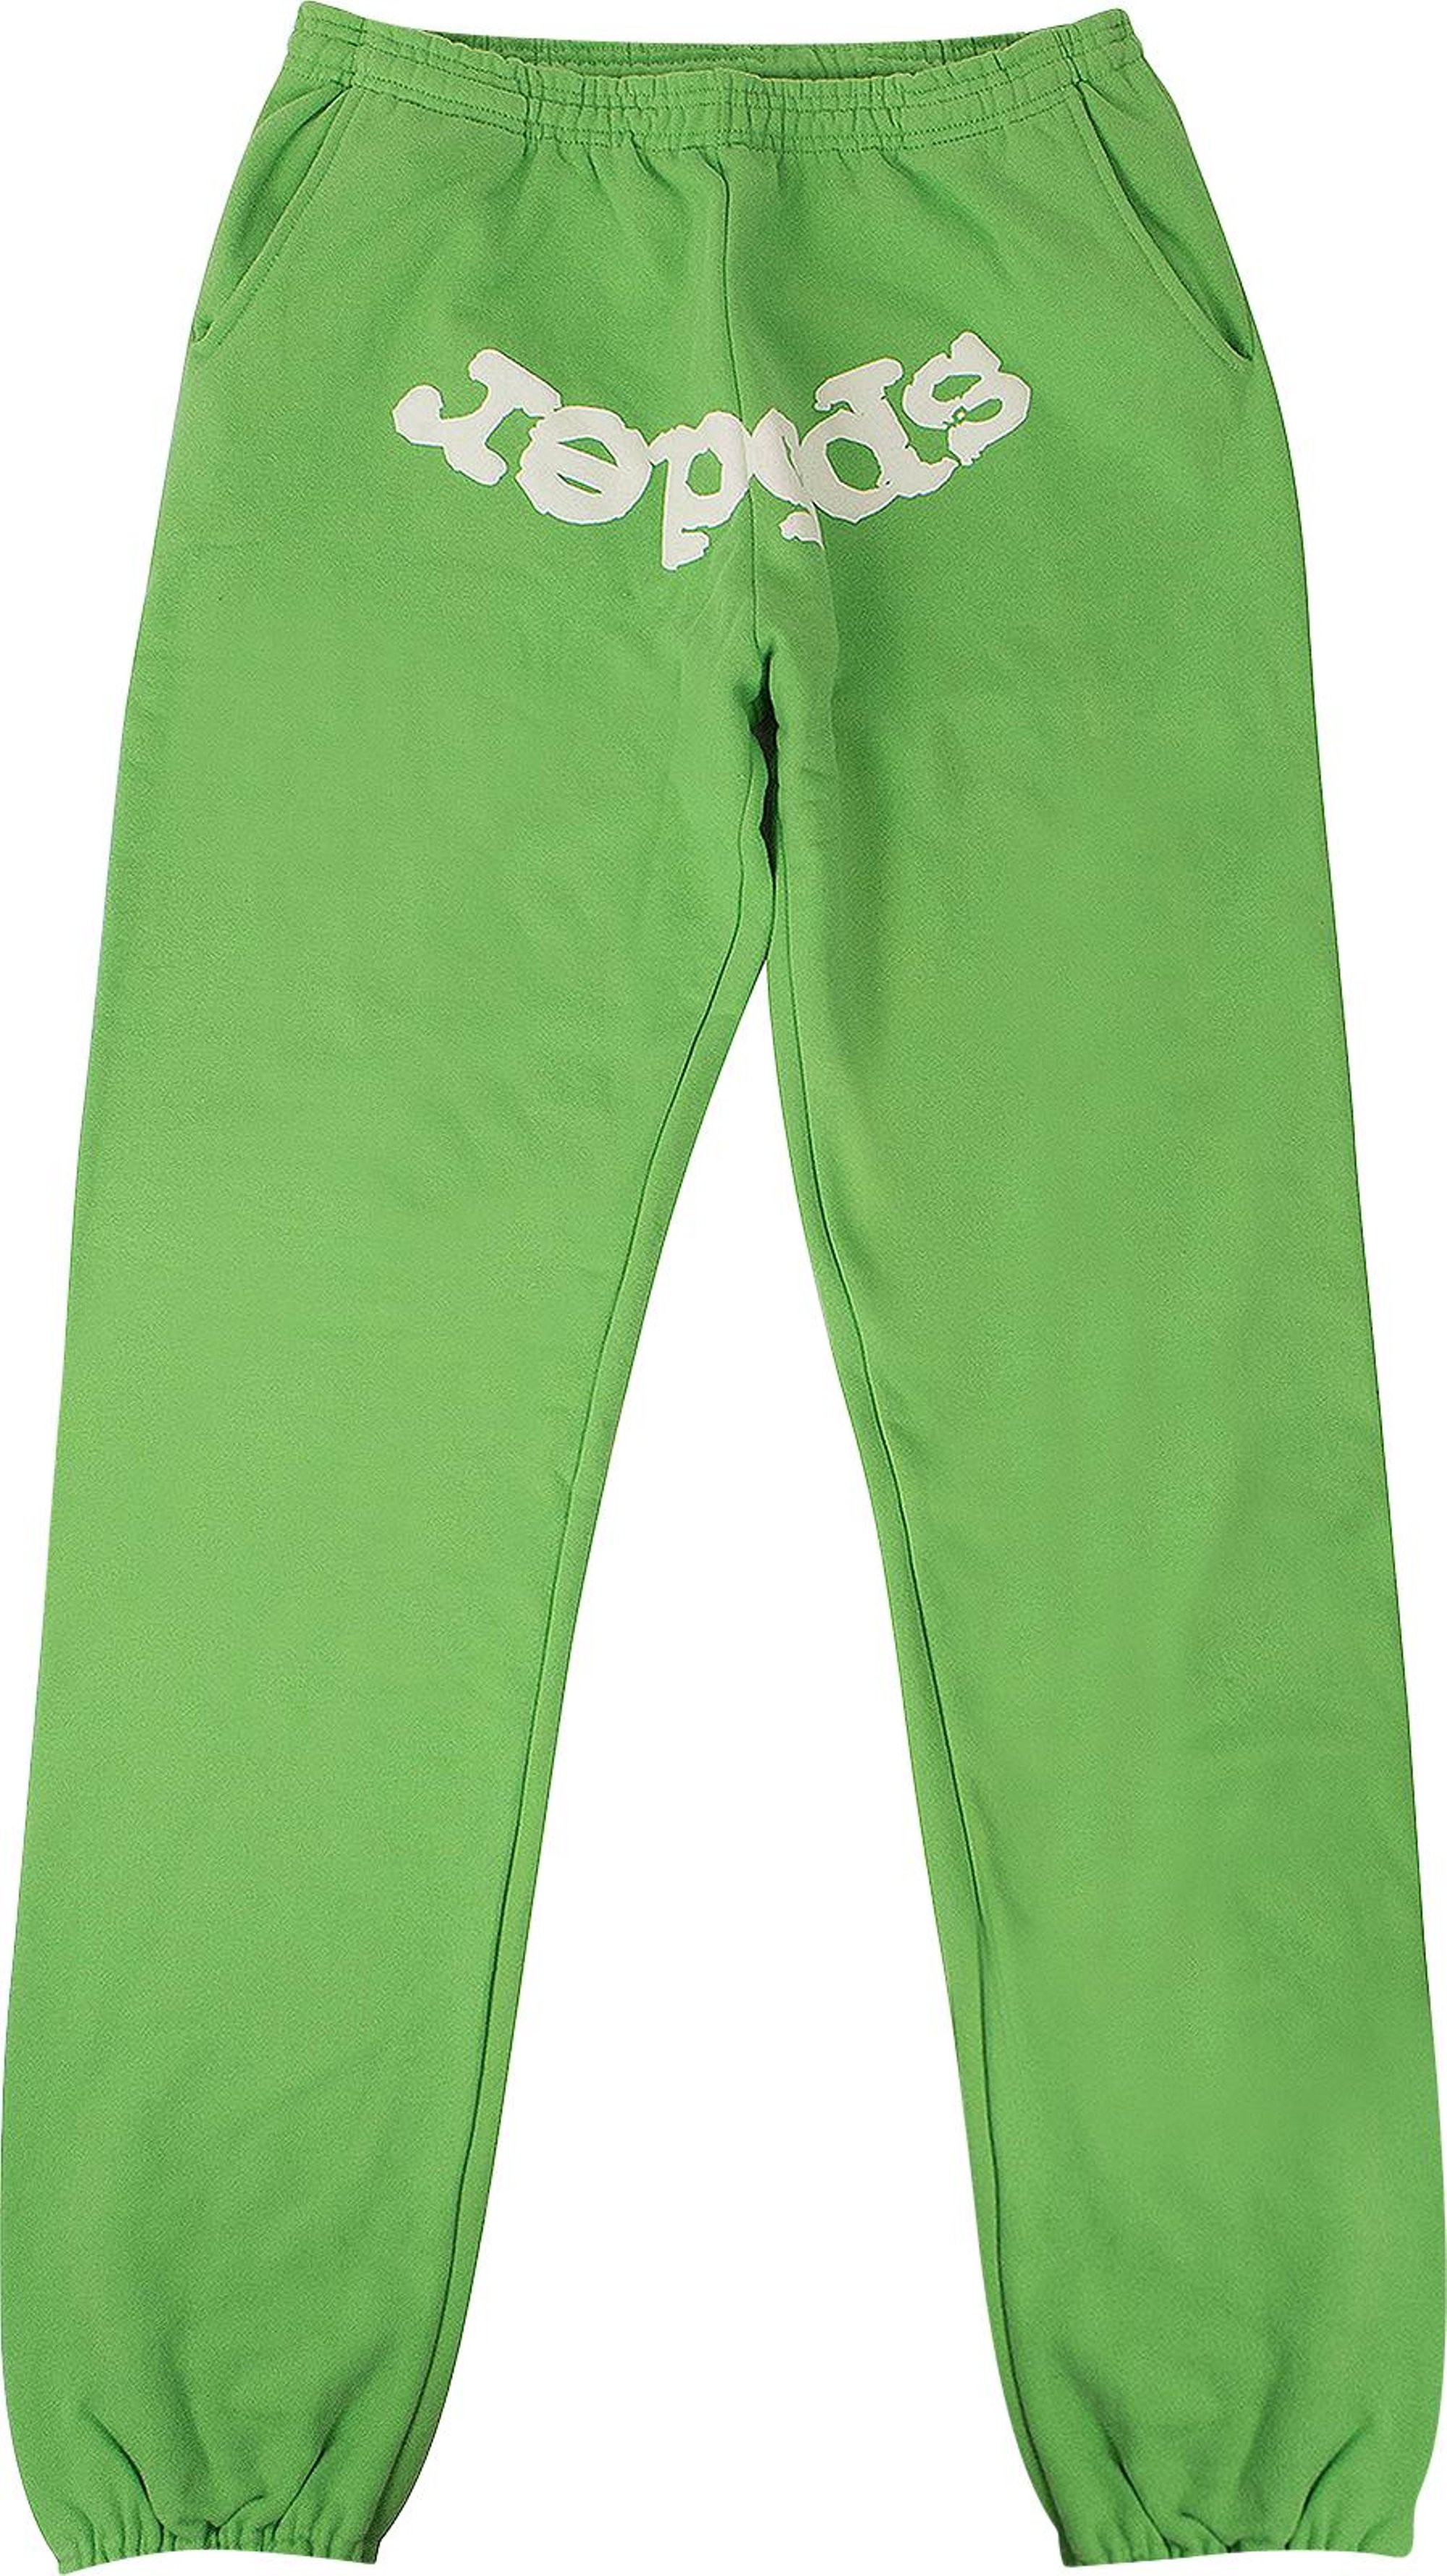 Buy Sp5der Logo Print Sweatpants 'Green' - 2406 100000204LPS GREE | GOAT